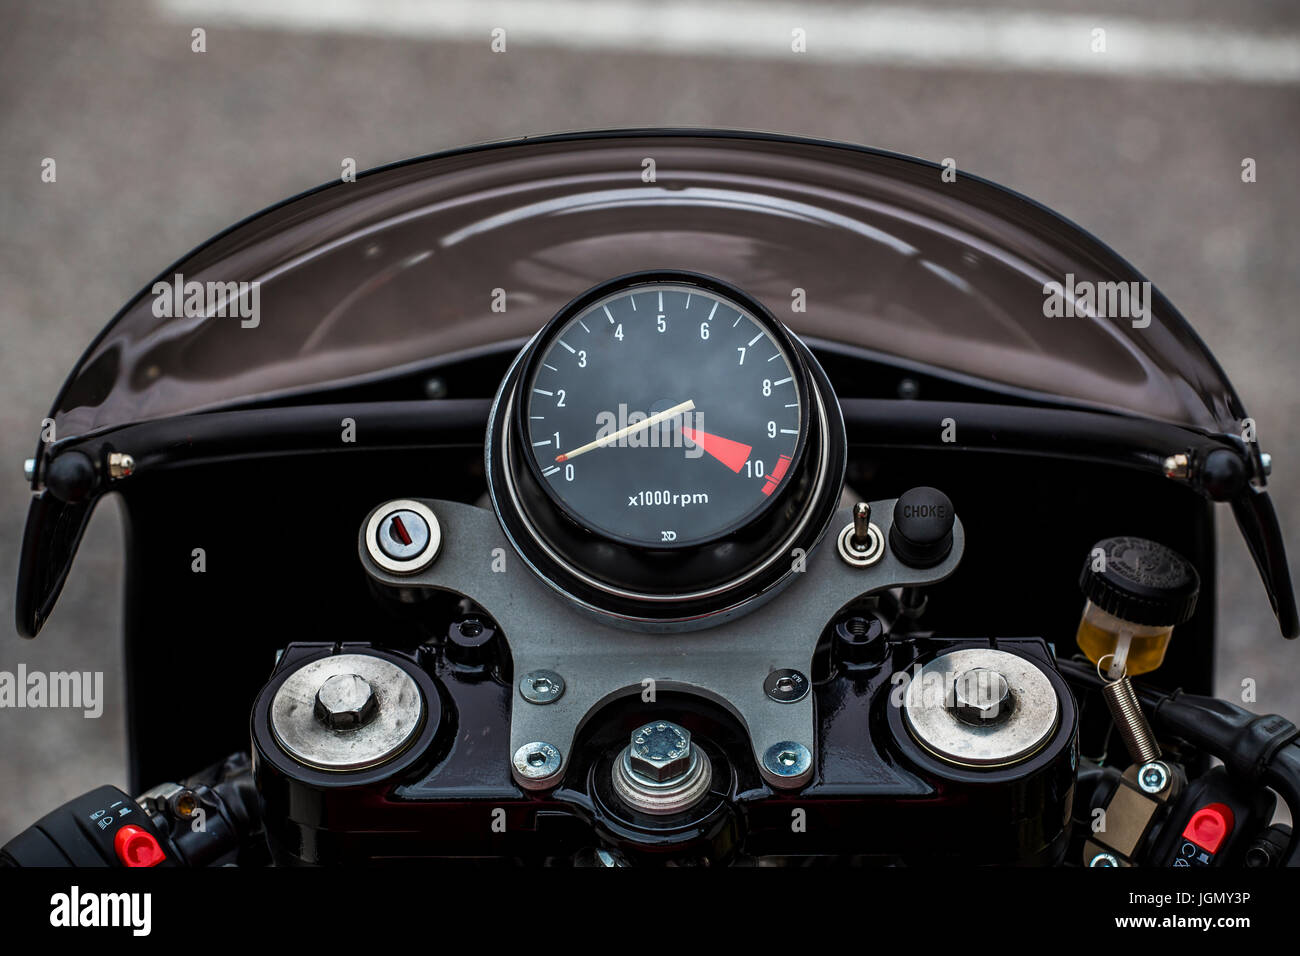 Motor-Tacho auf einem Motorrad Armaturenbrett Stockfotografie - Alamy